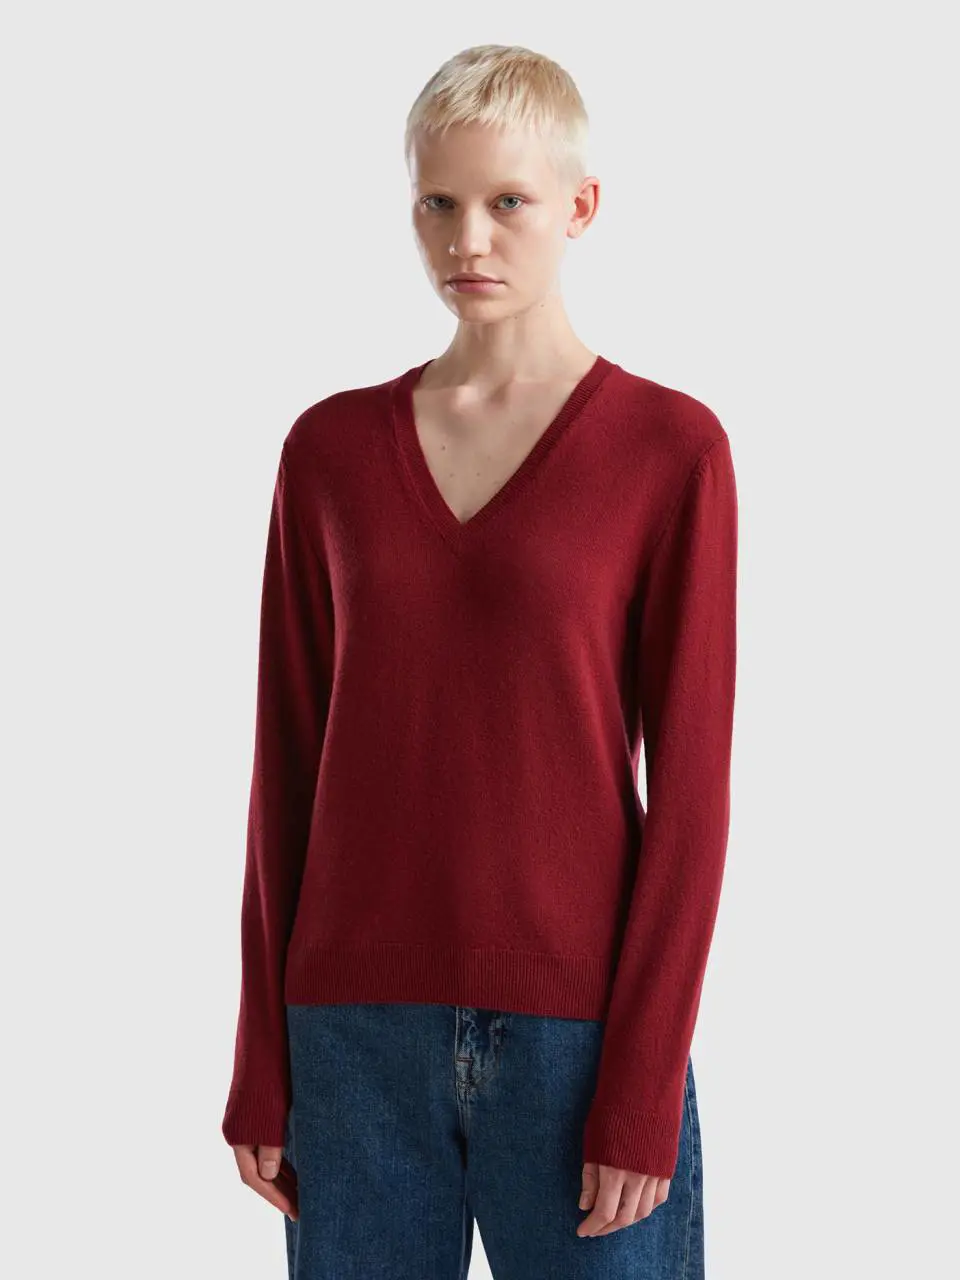 Benetton burgundy v-neck sweater in pure merino wool. 1